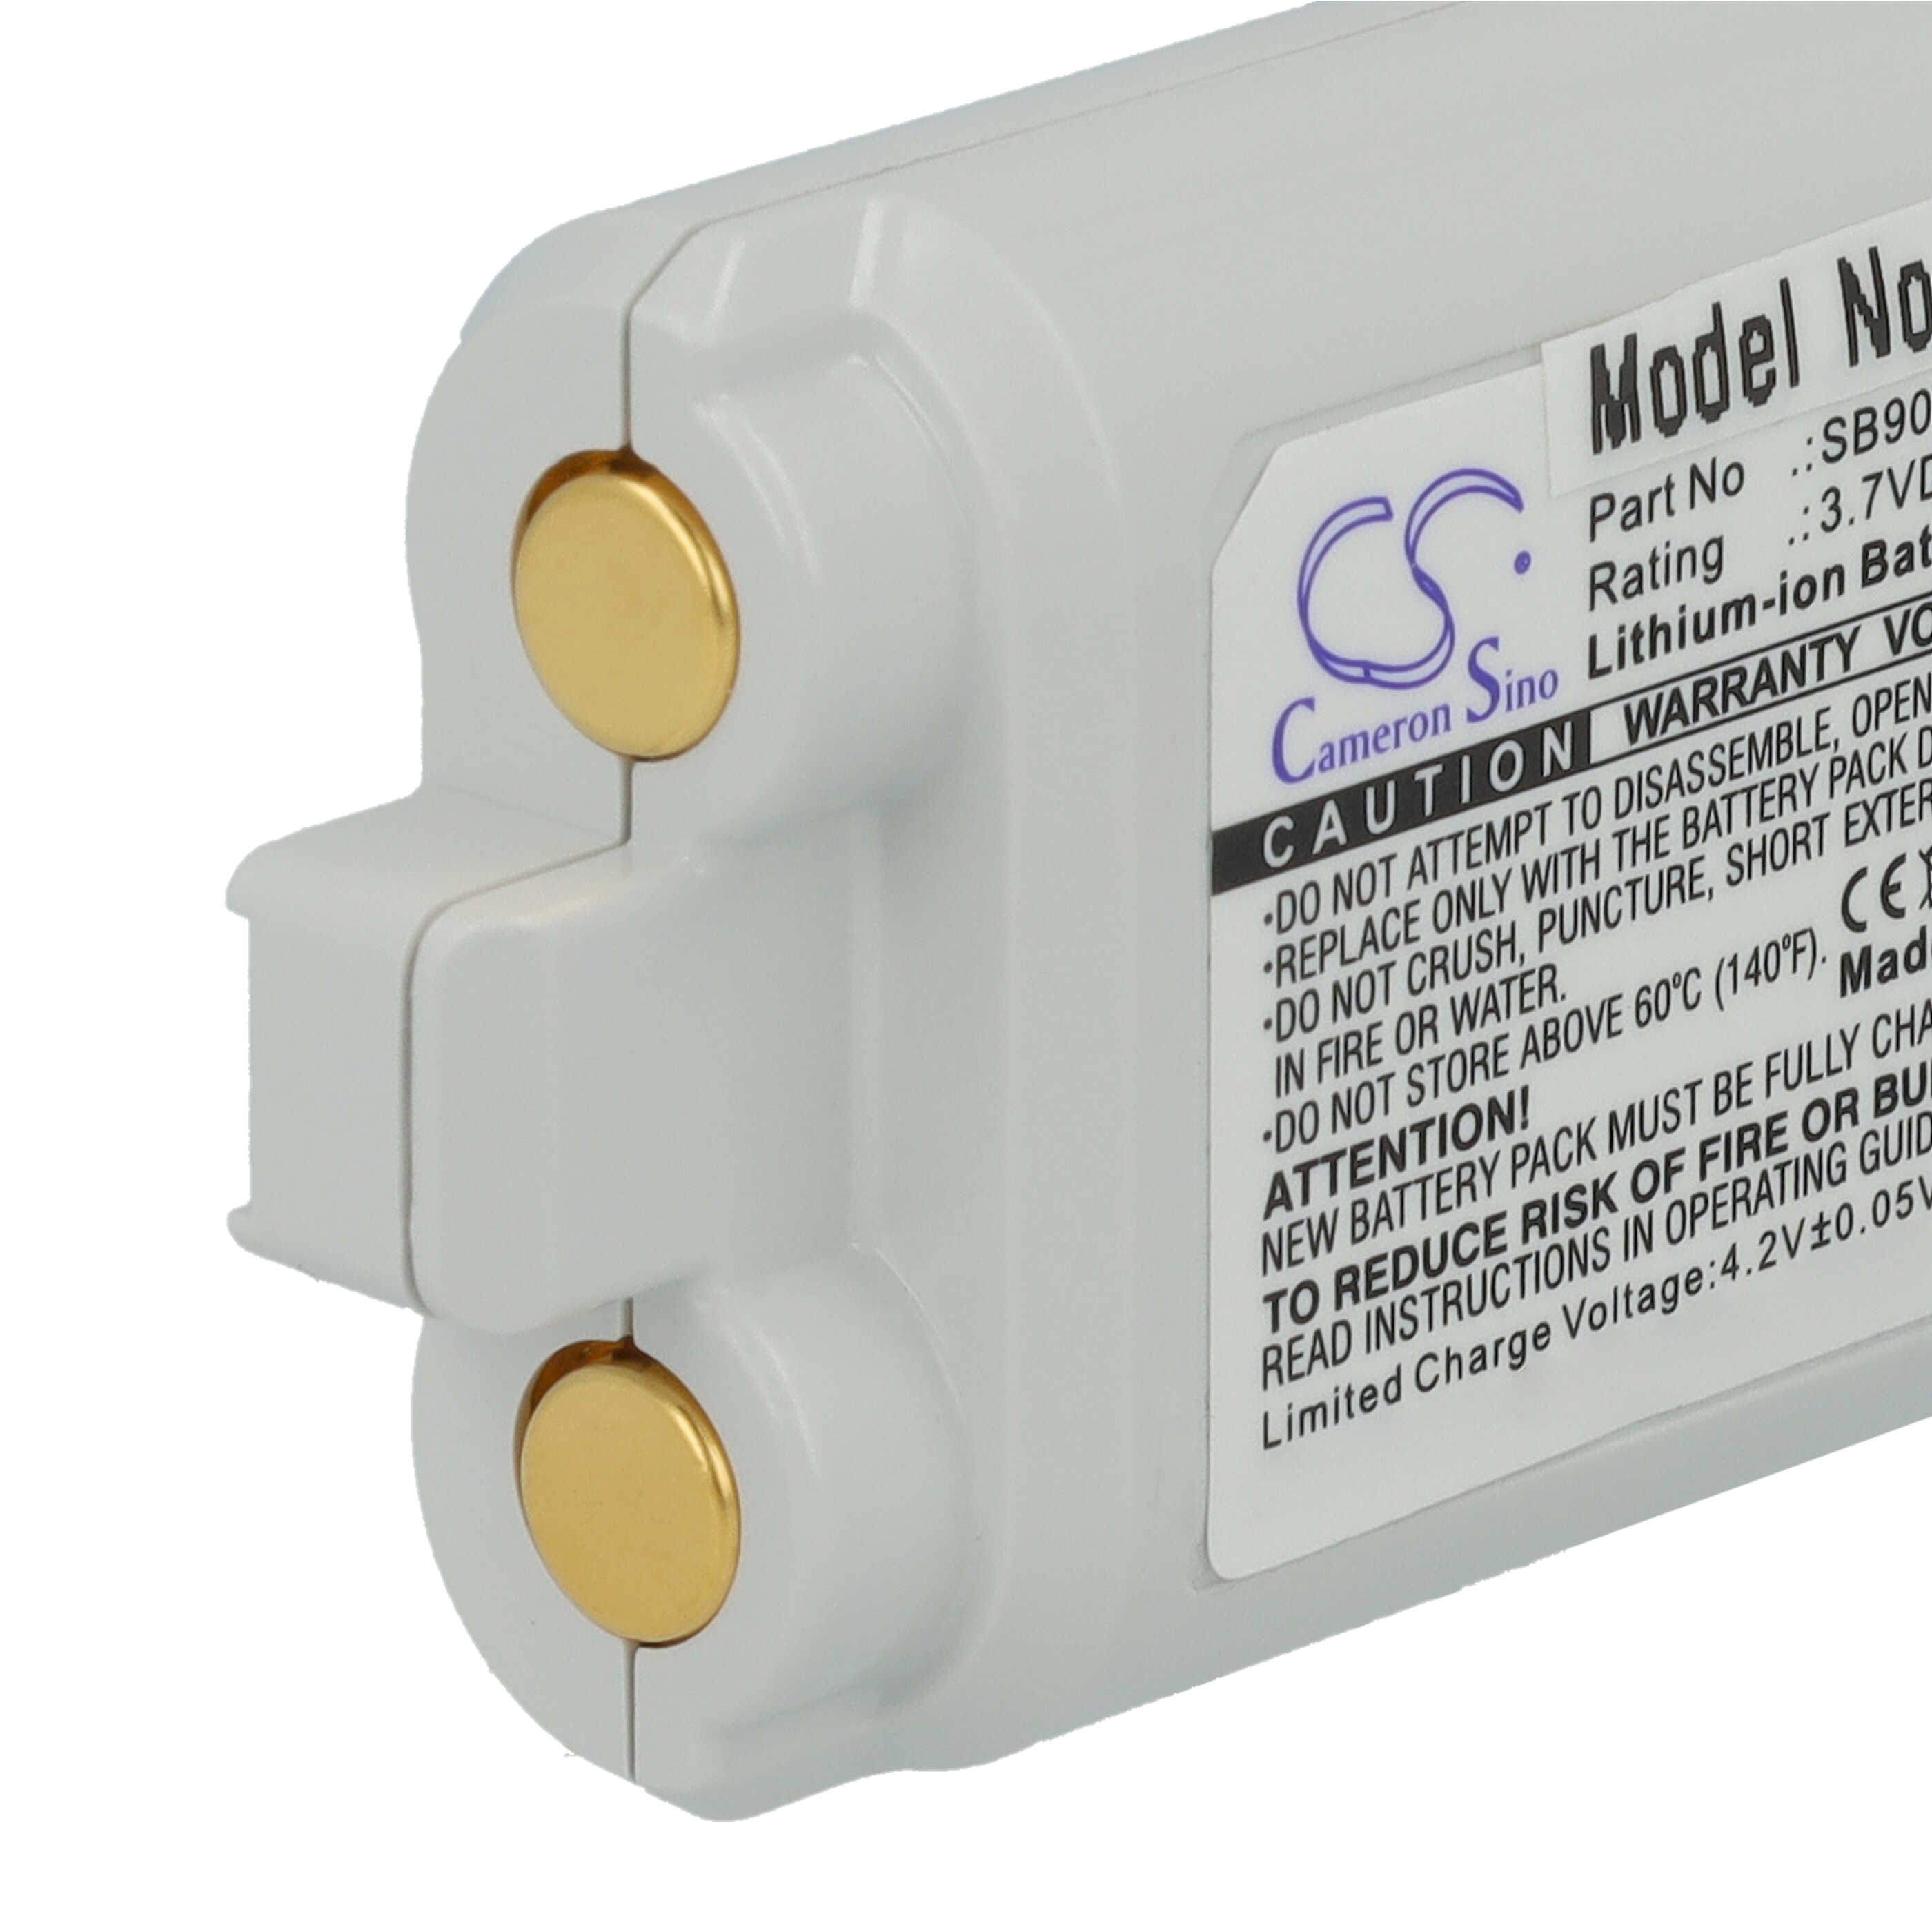 Transmitter Battery Replacement for Shure SBC903, SBC10-903, SB903, 95A36606 - 1200mAh 3.7V Li-Ion